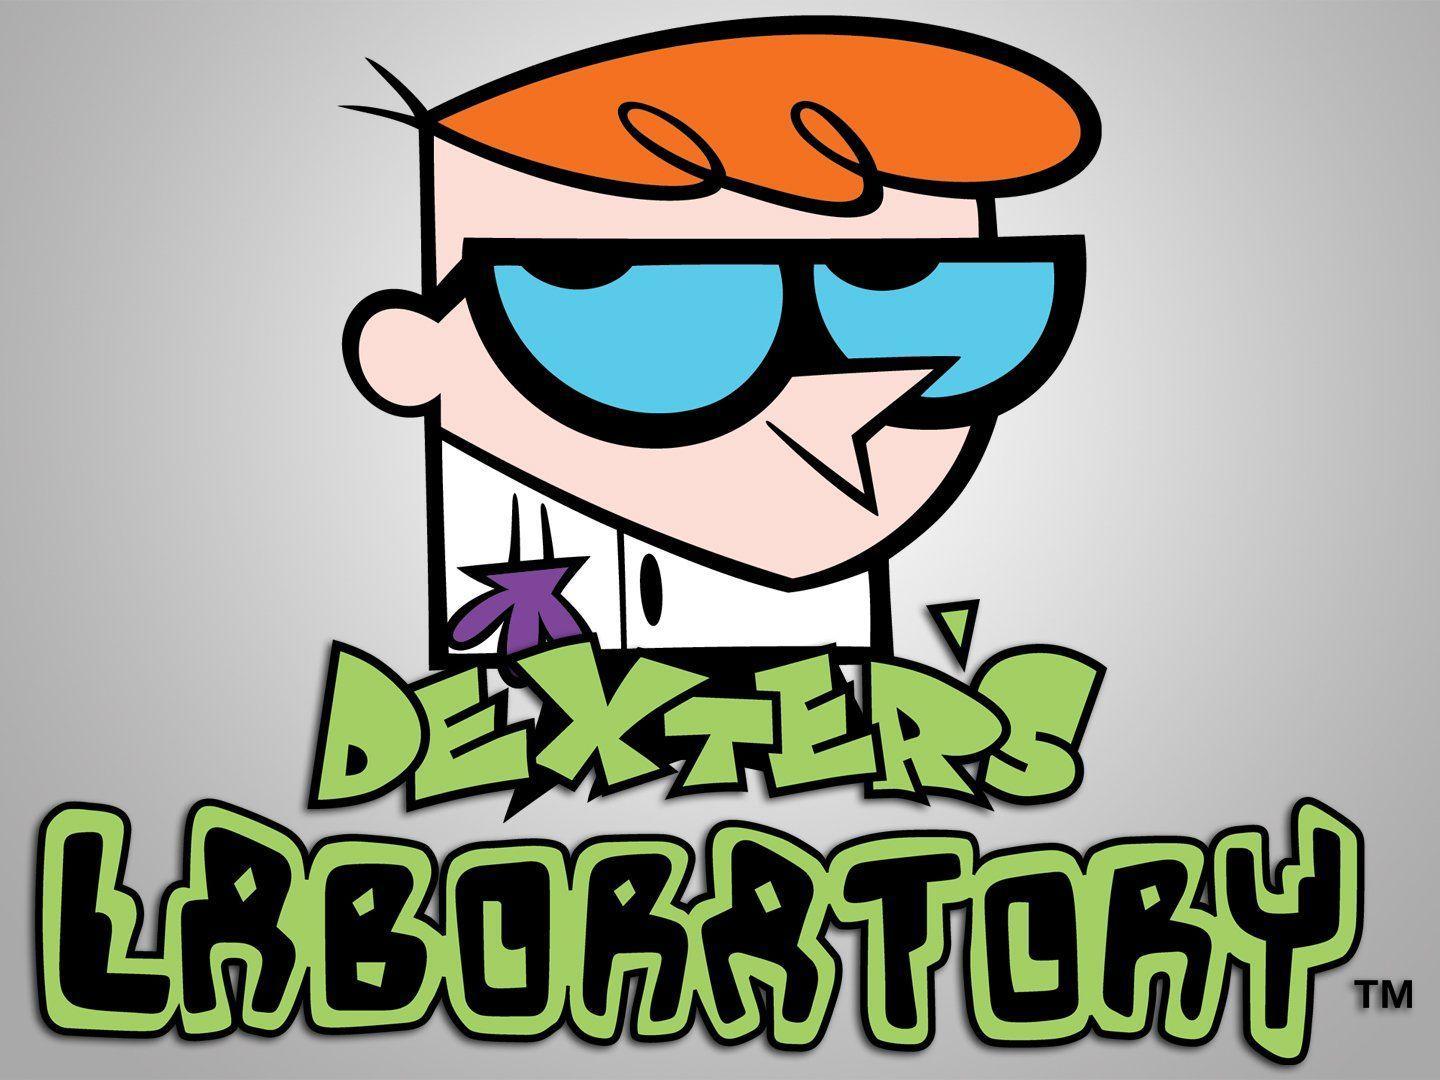 Dexters Laboratory 4k Wallpaper Download For Pc, Dexters Laboratory, Cartoons